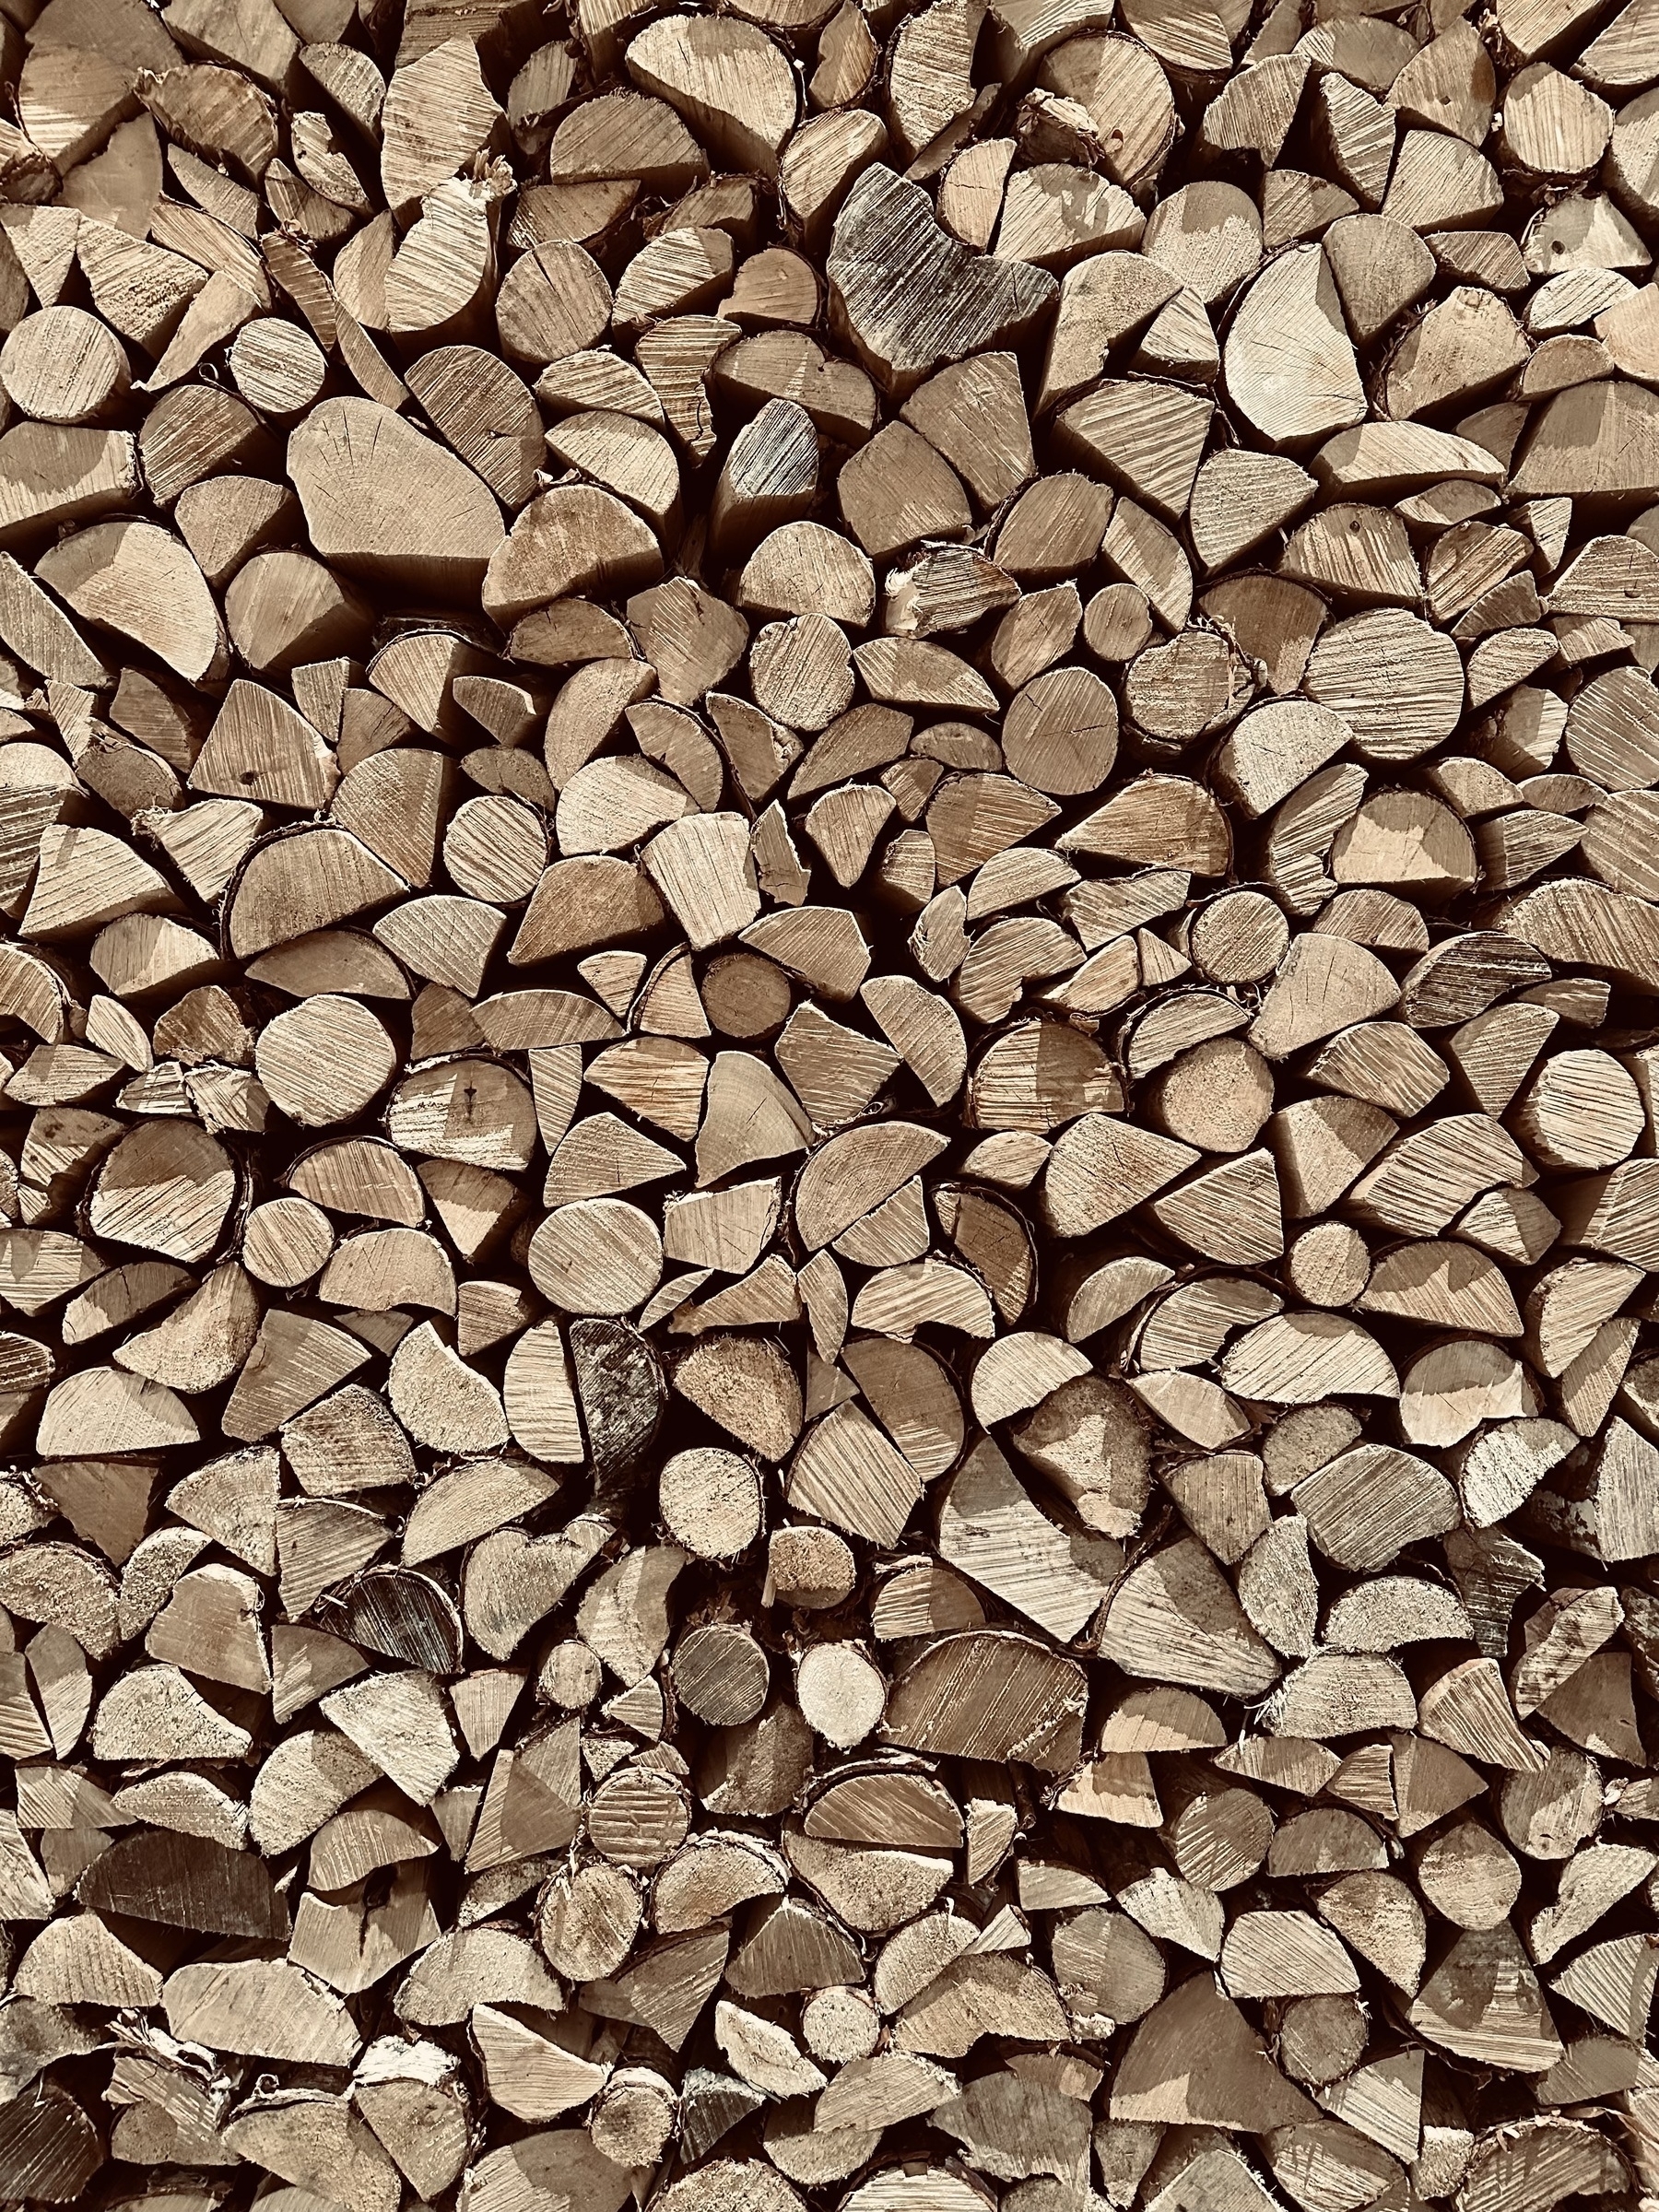 A big pile of chopped wood.